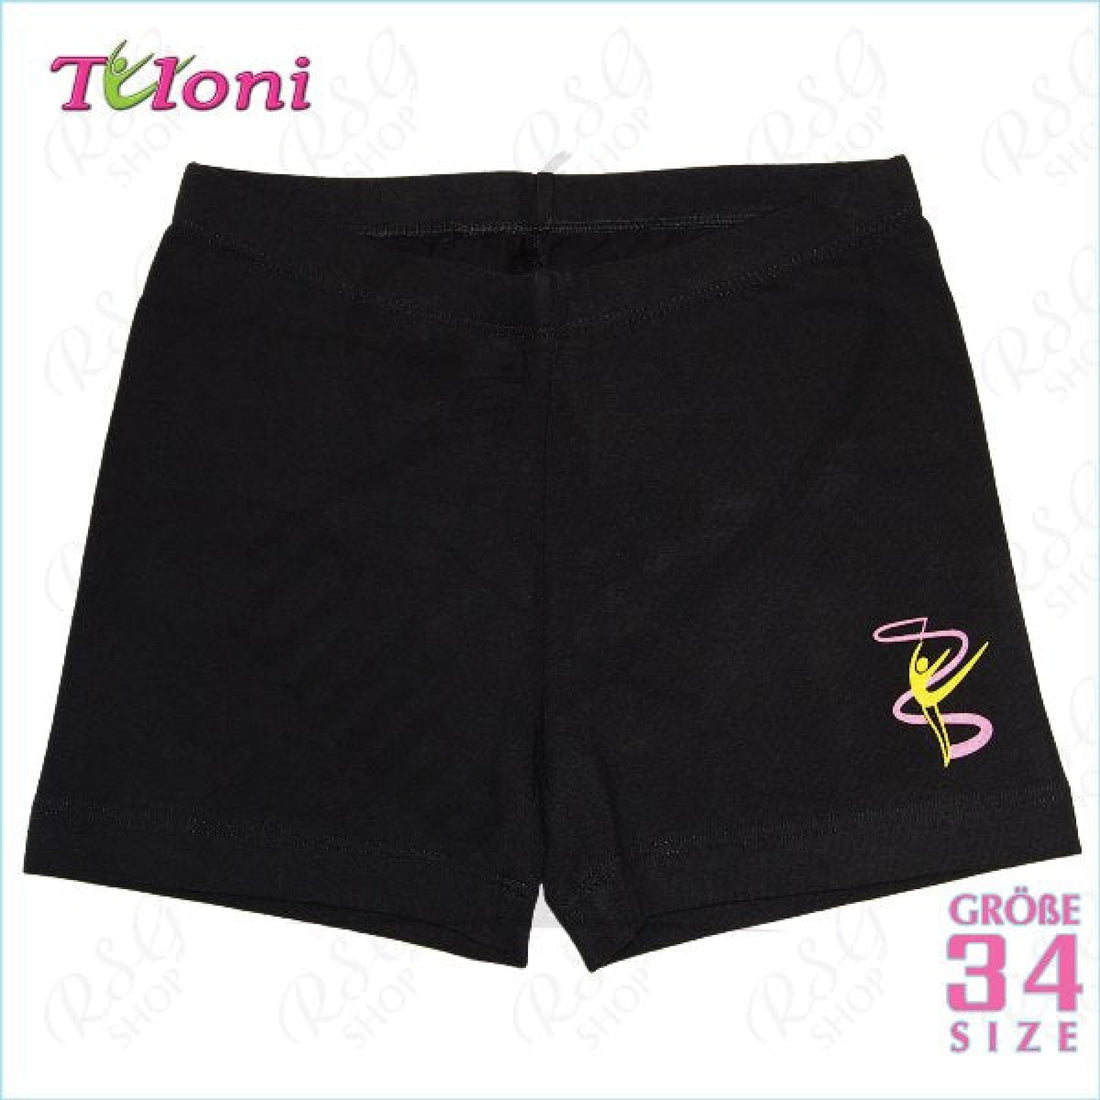 Tuloni Shorts Black With Gymnasts Emblem 34 (122-128)